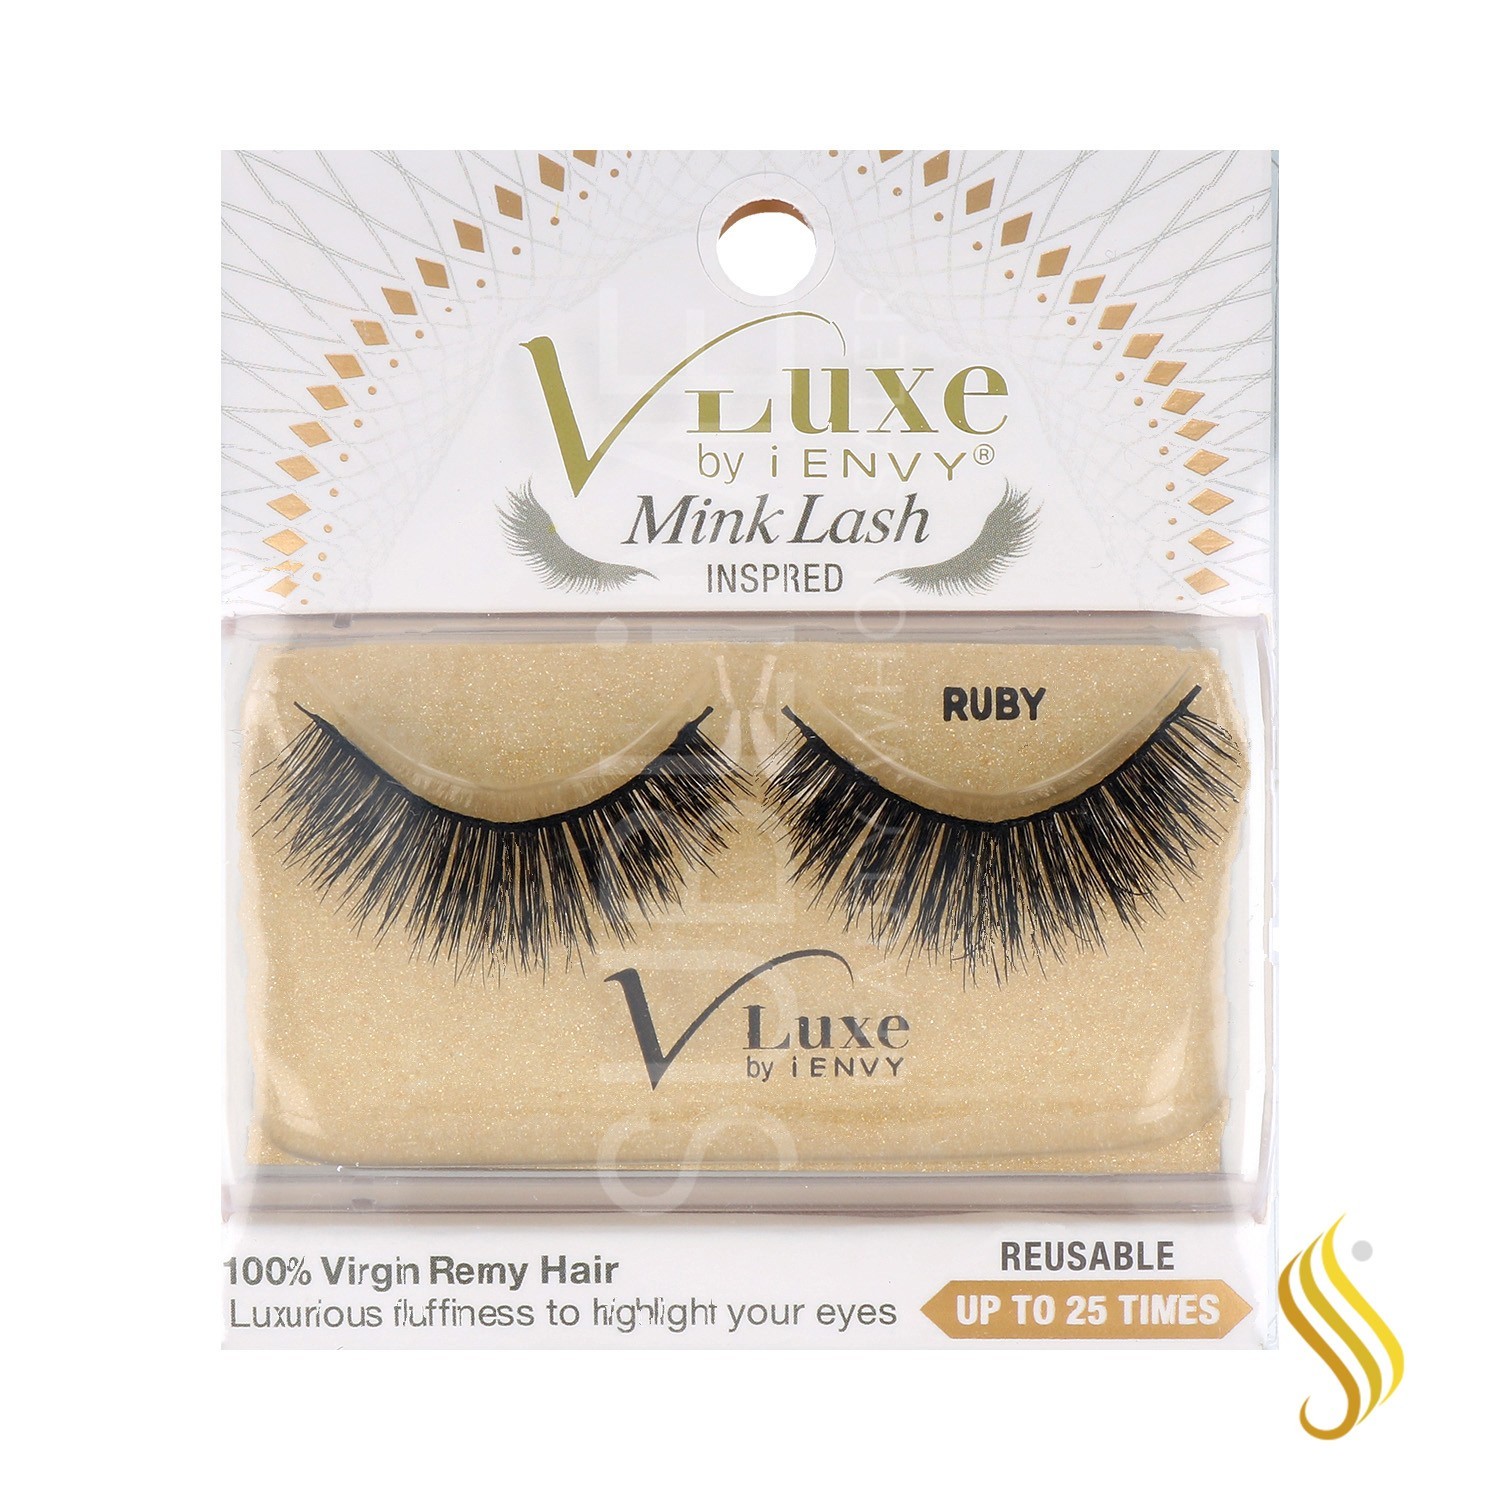 I Envy V Luxe Remy Hair Minklash/Pestana Inspired Ruby (Vlef05)